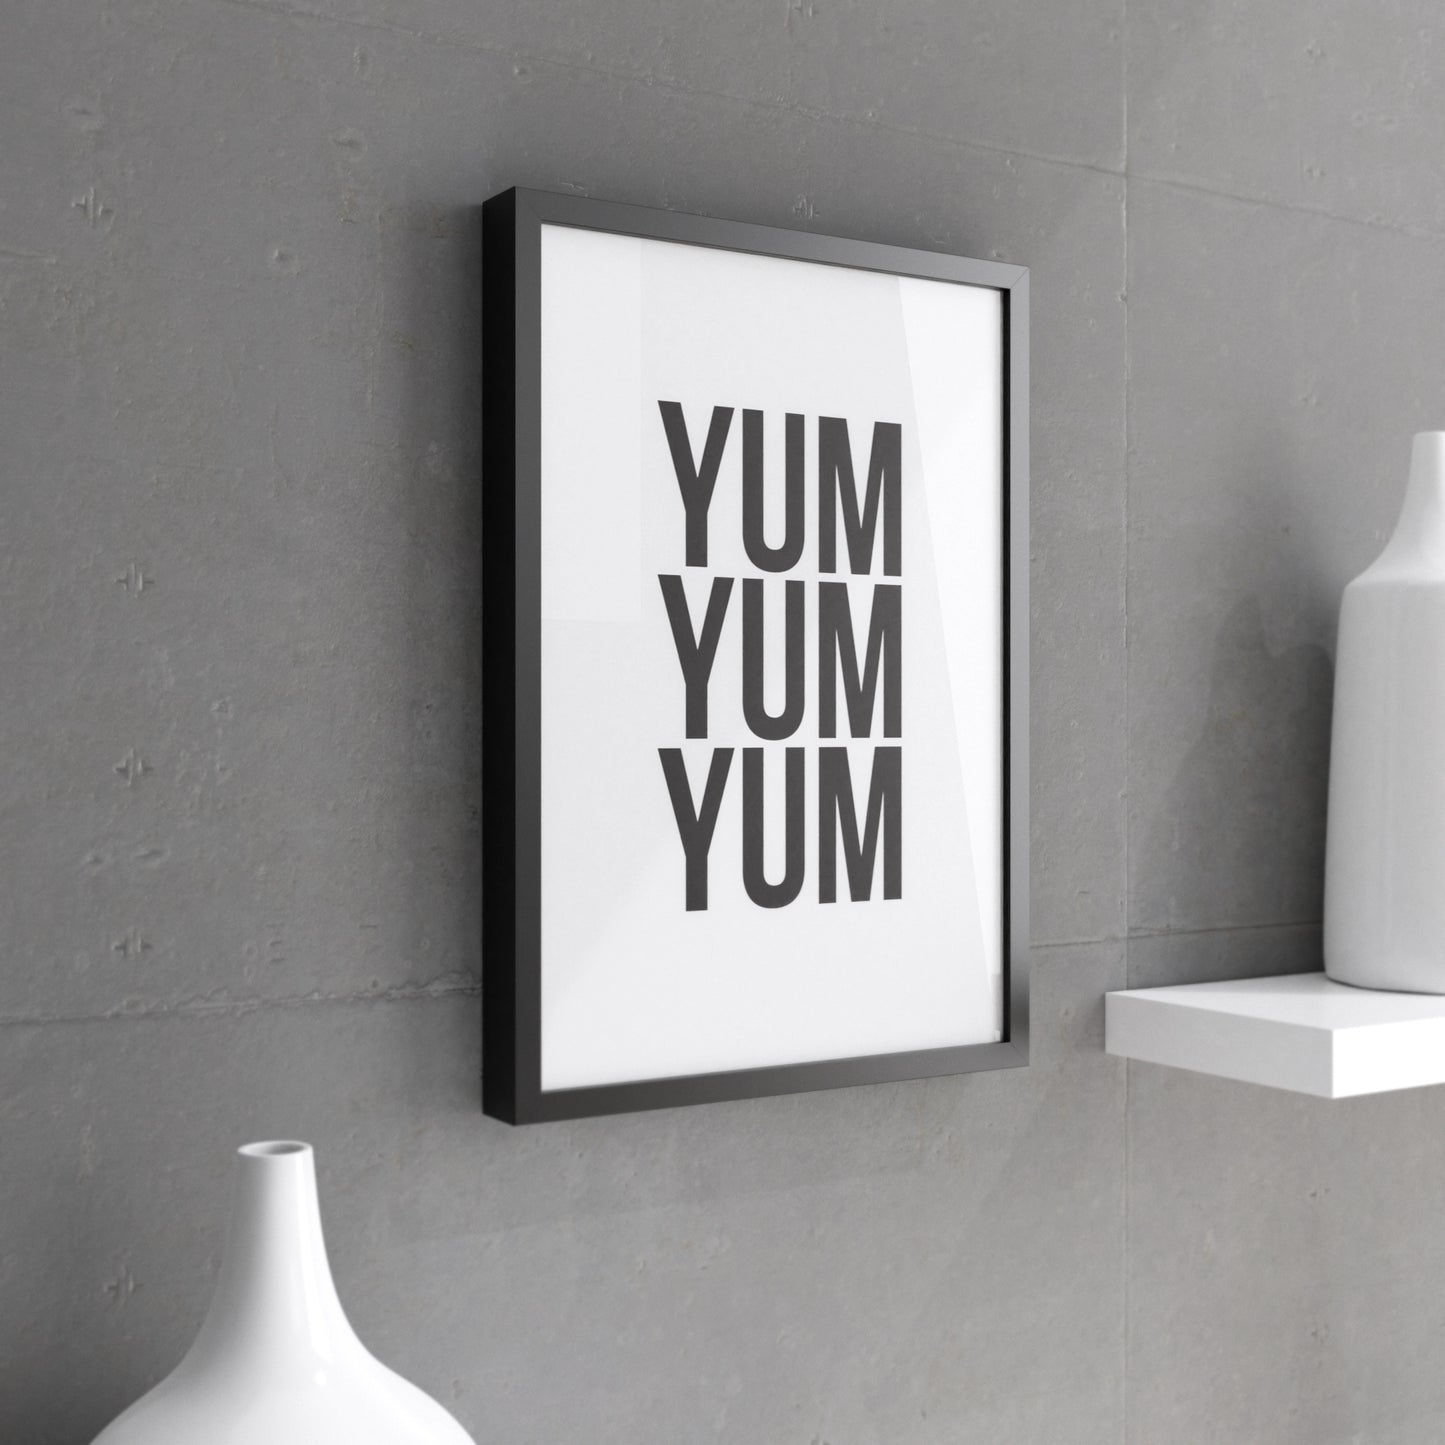 Yum yum yum design wall decor with text, kitchen wall decor prints